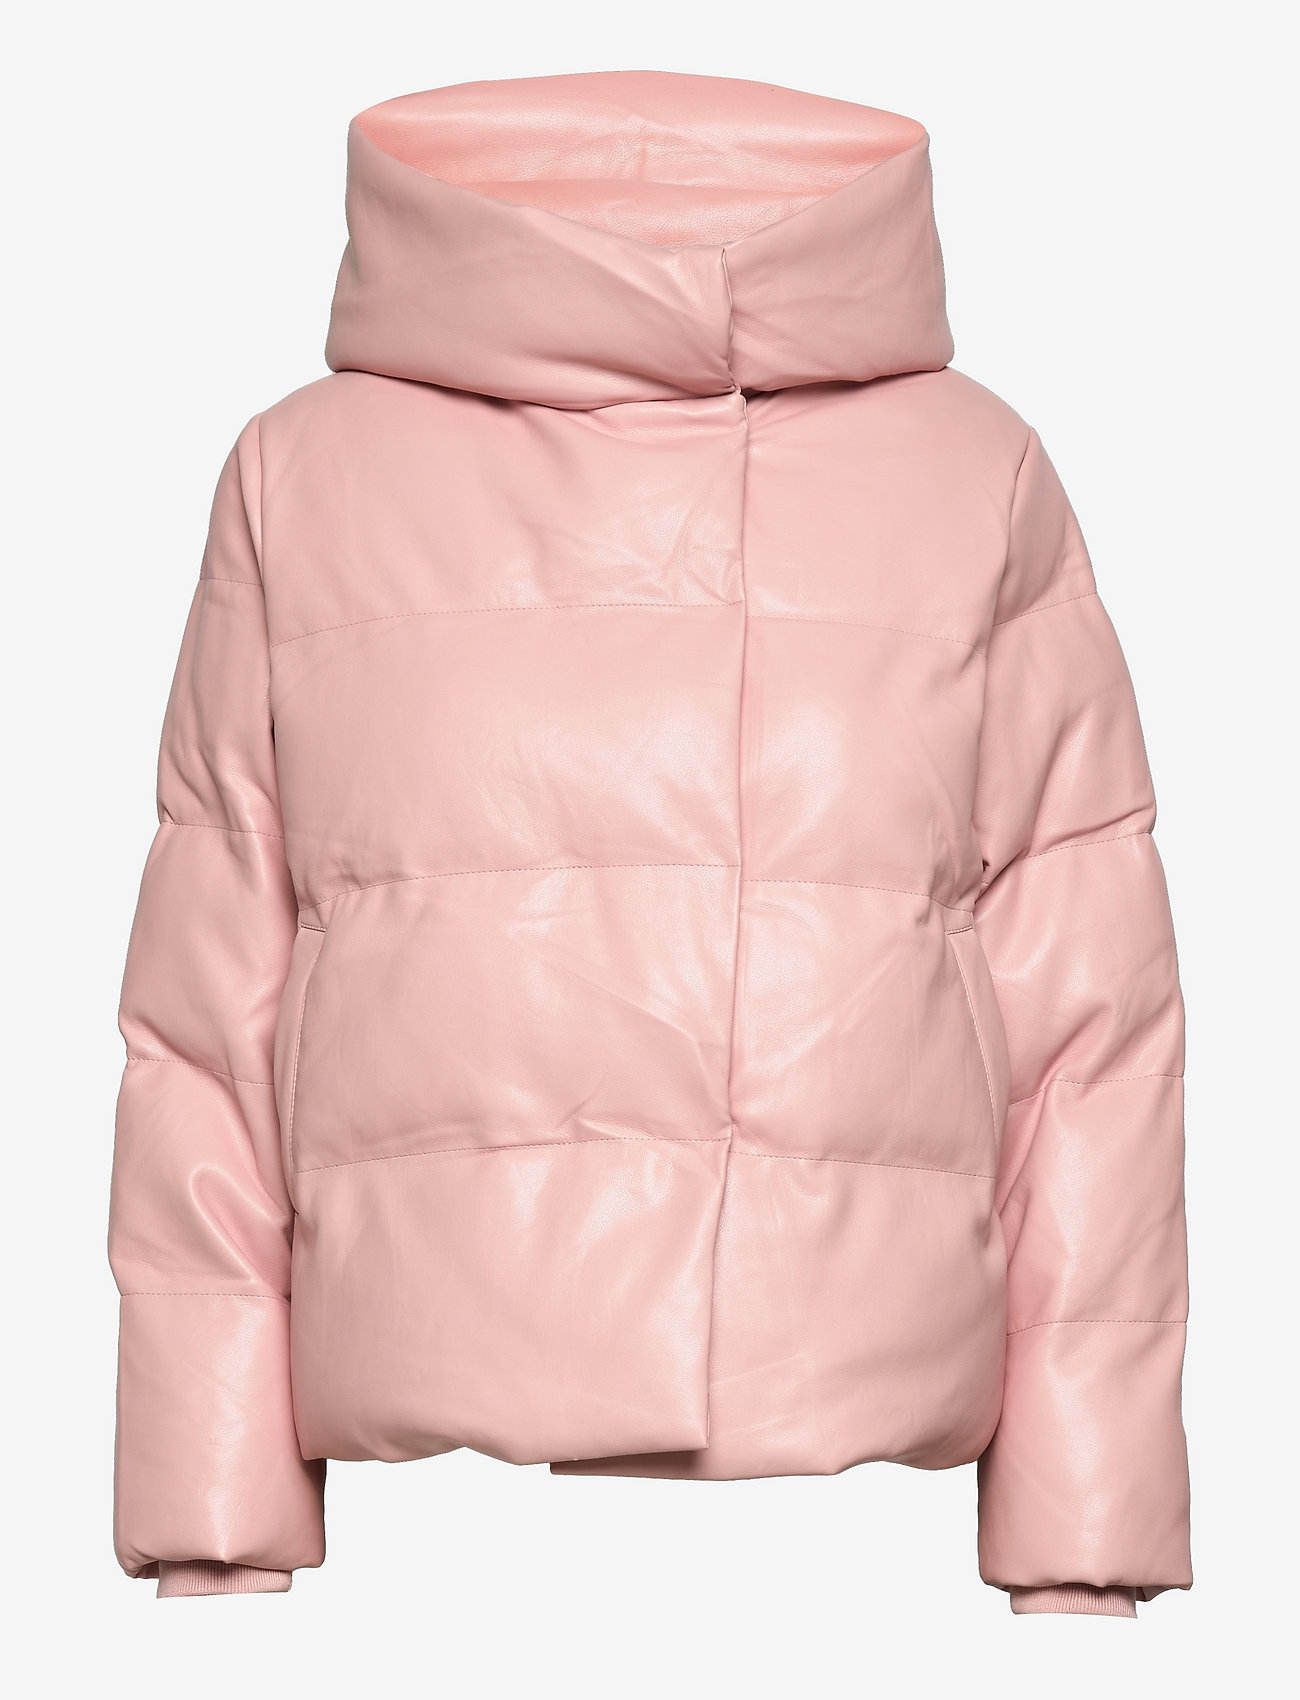 Jakke - Patricia Faux Leather Puffer with Hood - winter jacket - pink - 0